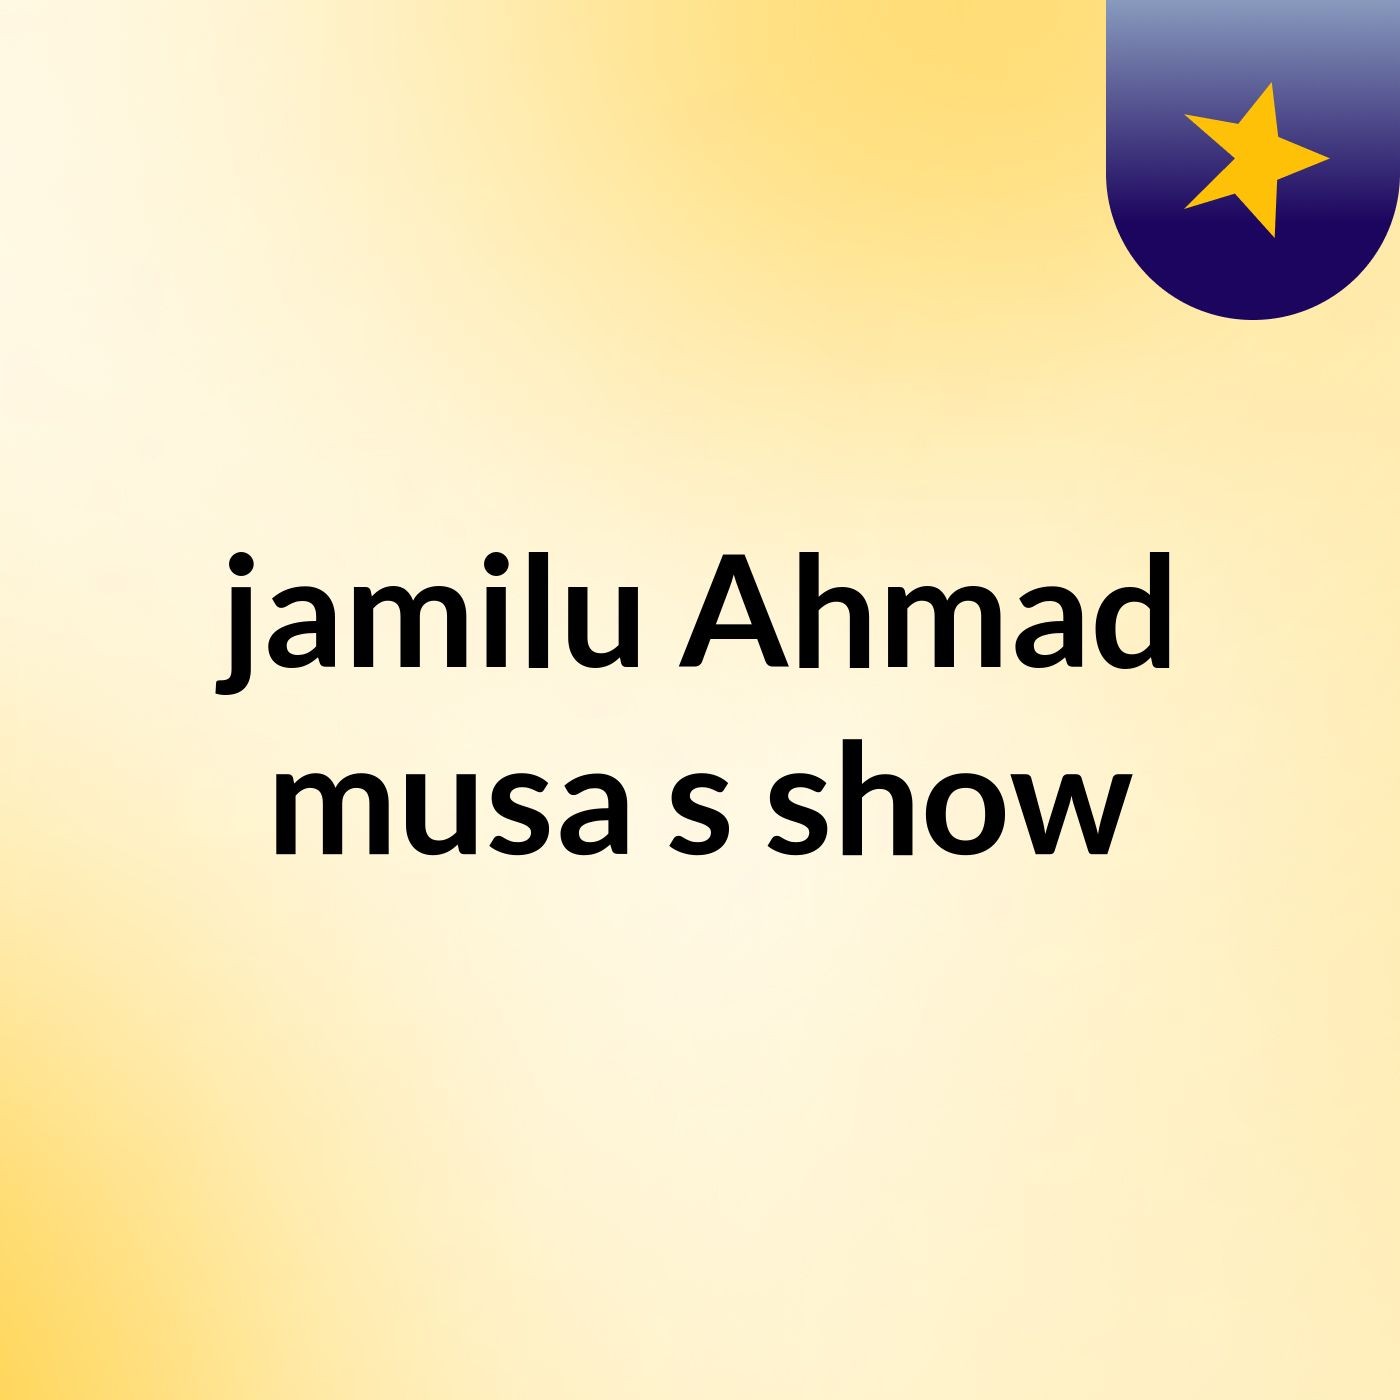 jamilu Ahmad musa's show